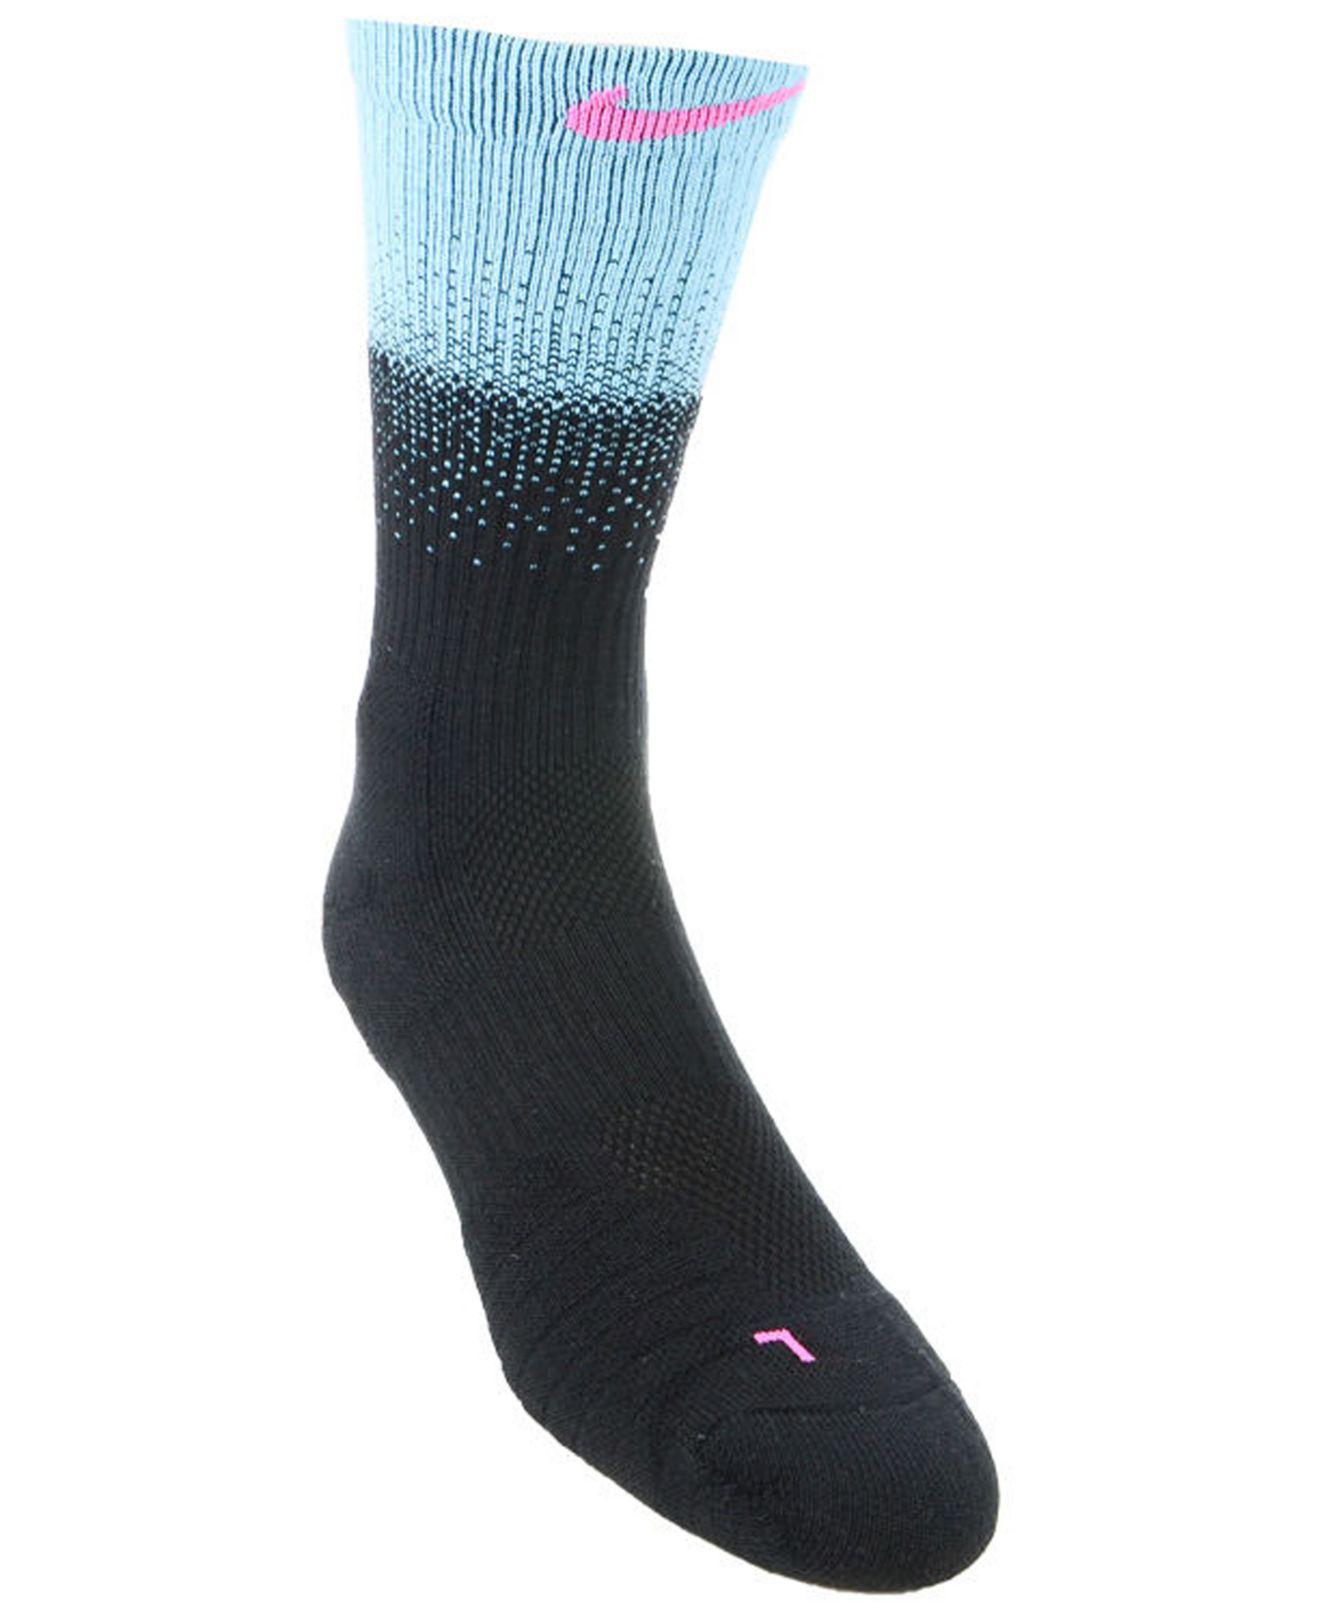 blue and pink elite socks